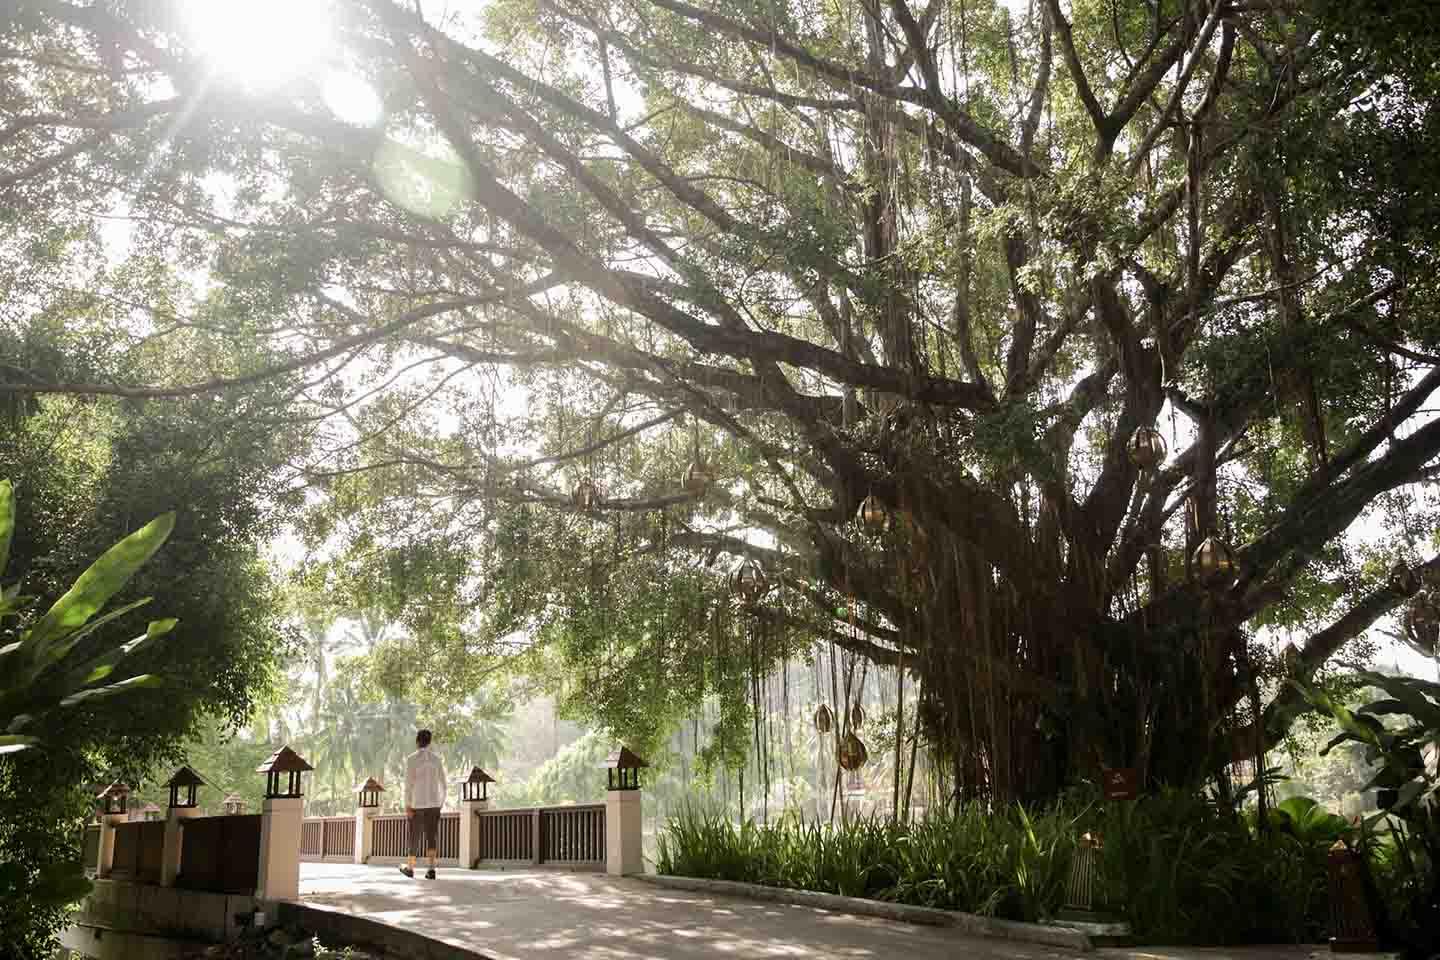 under the banyan tree